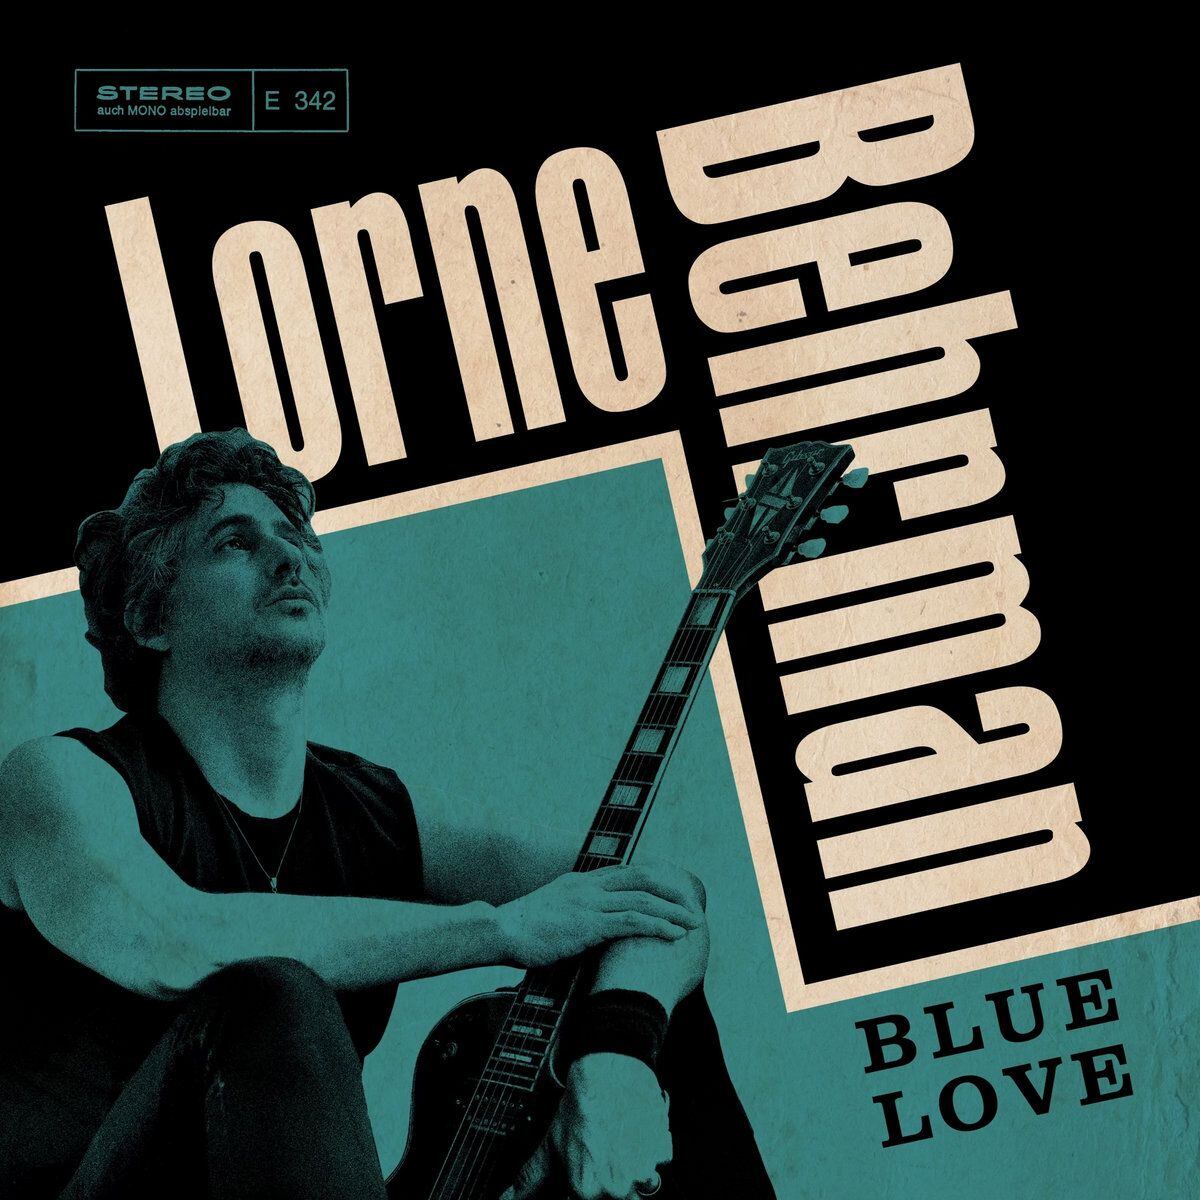 Portada del disco de Lorne Behrman, ‘Blue Love’.